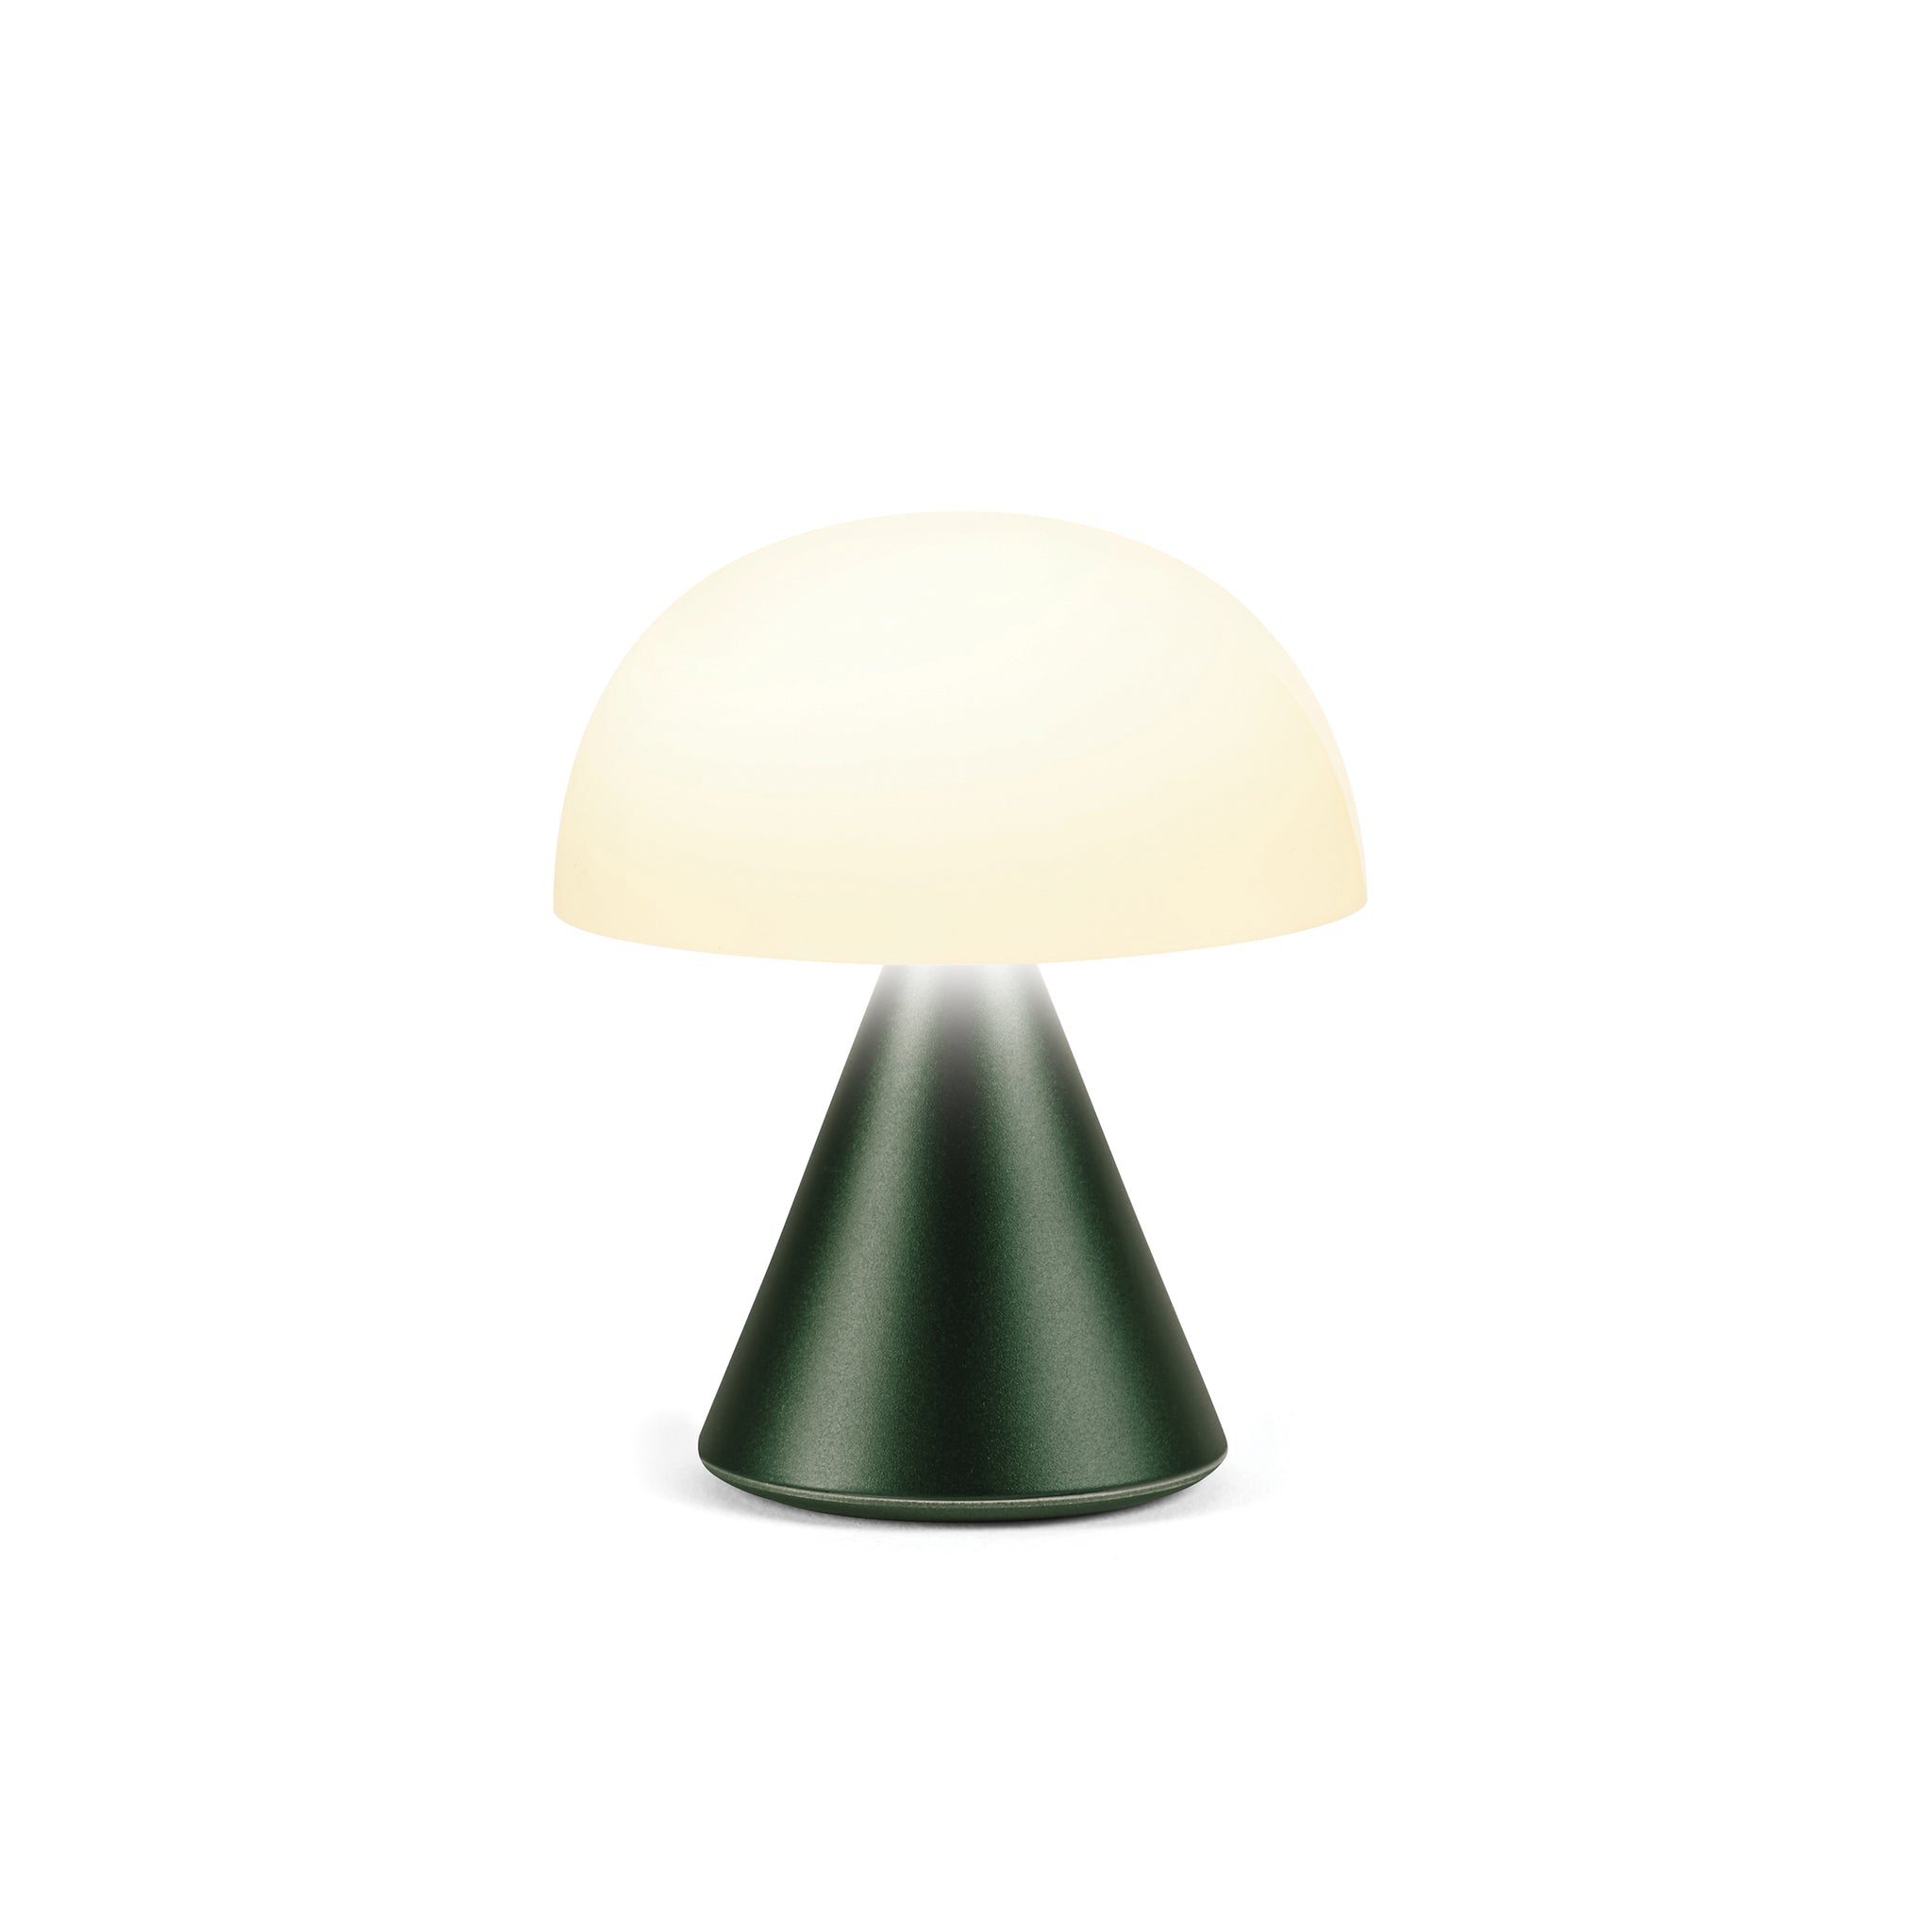 Lexon Mina Small Oplaadbare LED-Lamp Donkergroen│art. LH60DG1│voorkant witte achtergrond met warm licht aan